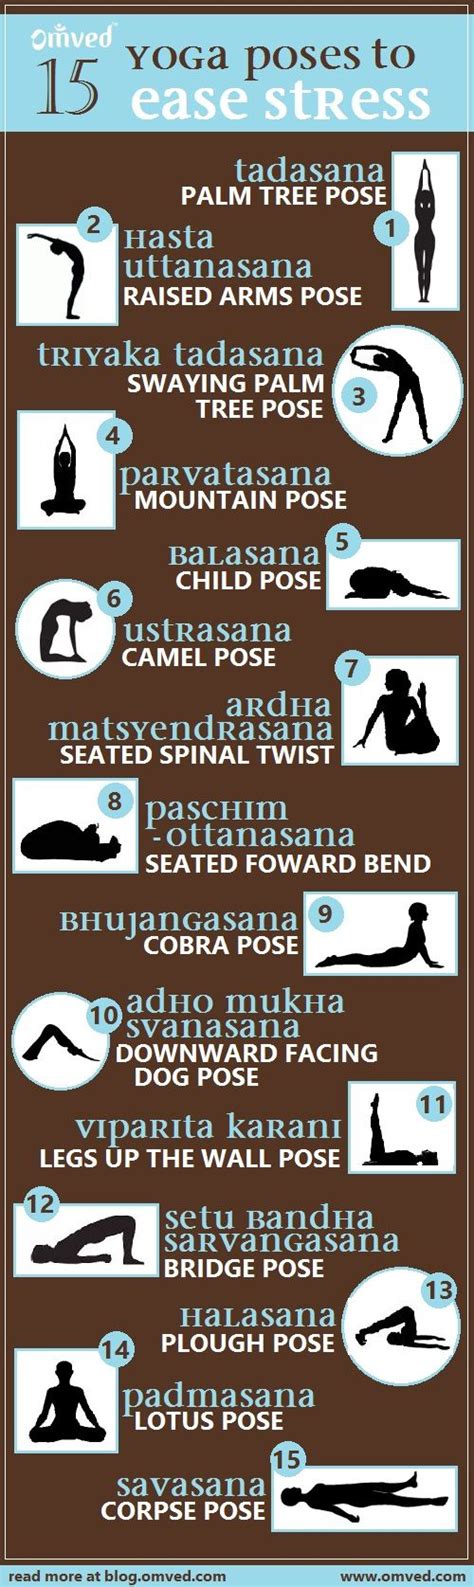 affiche postures fiche yoga maternelle